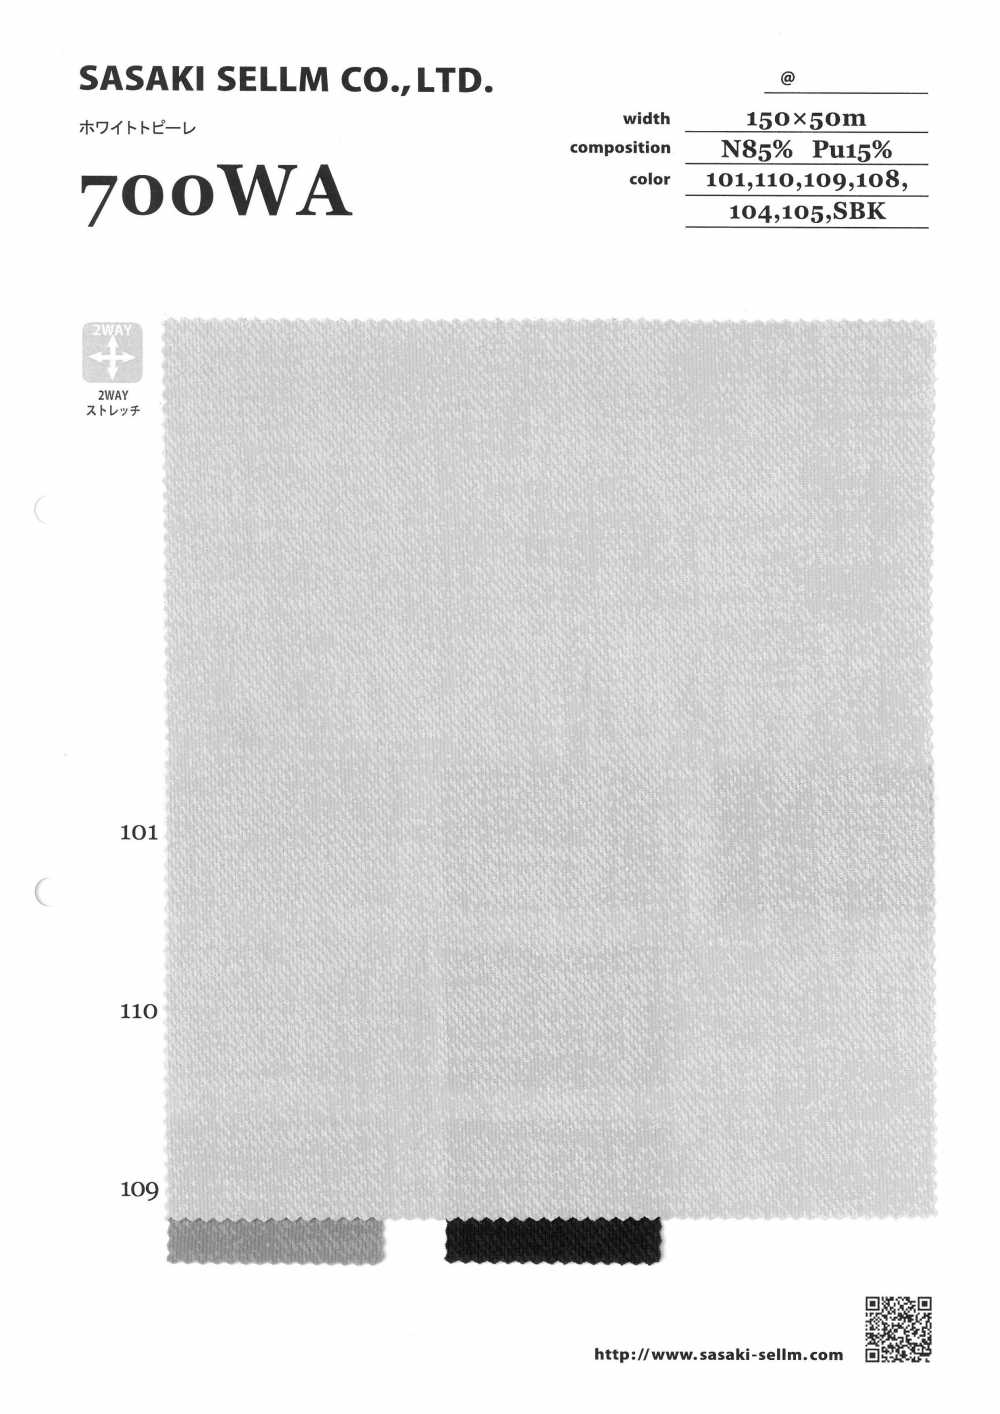 700WA Weißer Topir[Textilgewebe] SASAKISELLM